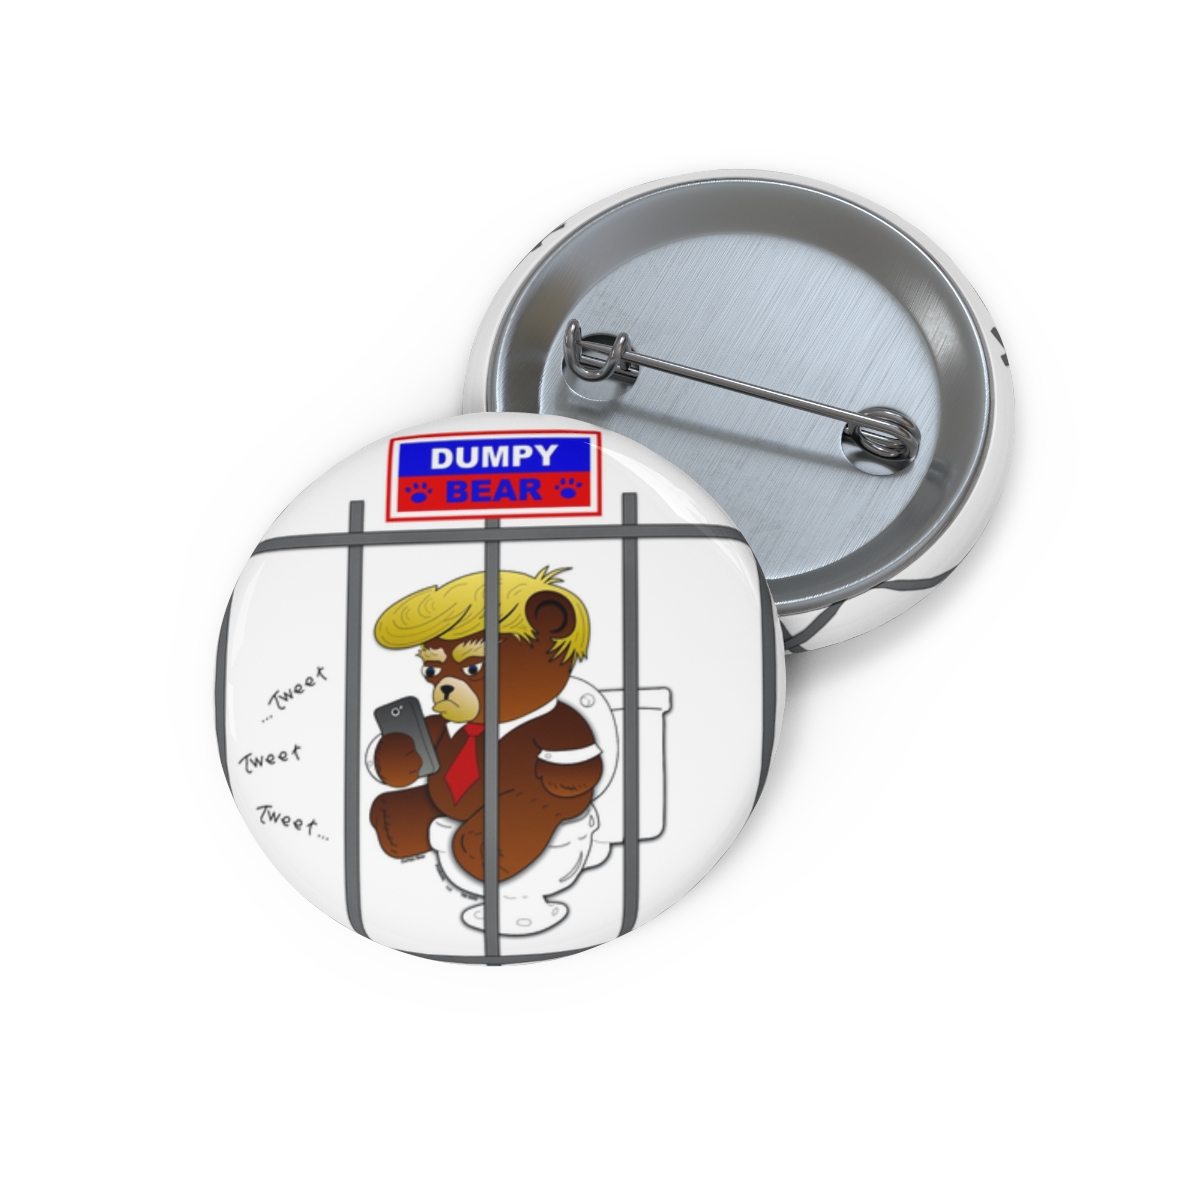 Dumpy Bear Tweeting on Toilet Behind Bars - Custom Pin Buttons product thumbnail image